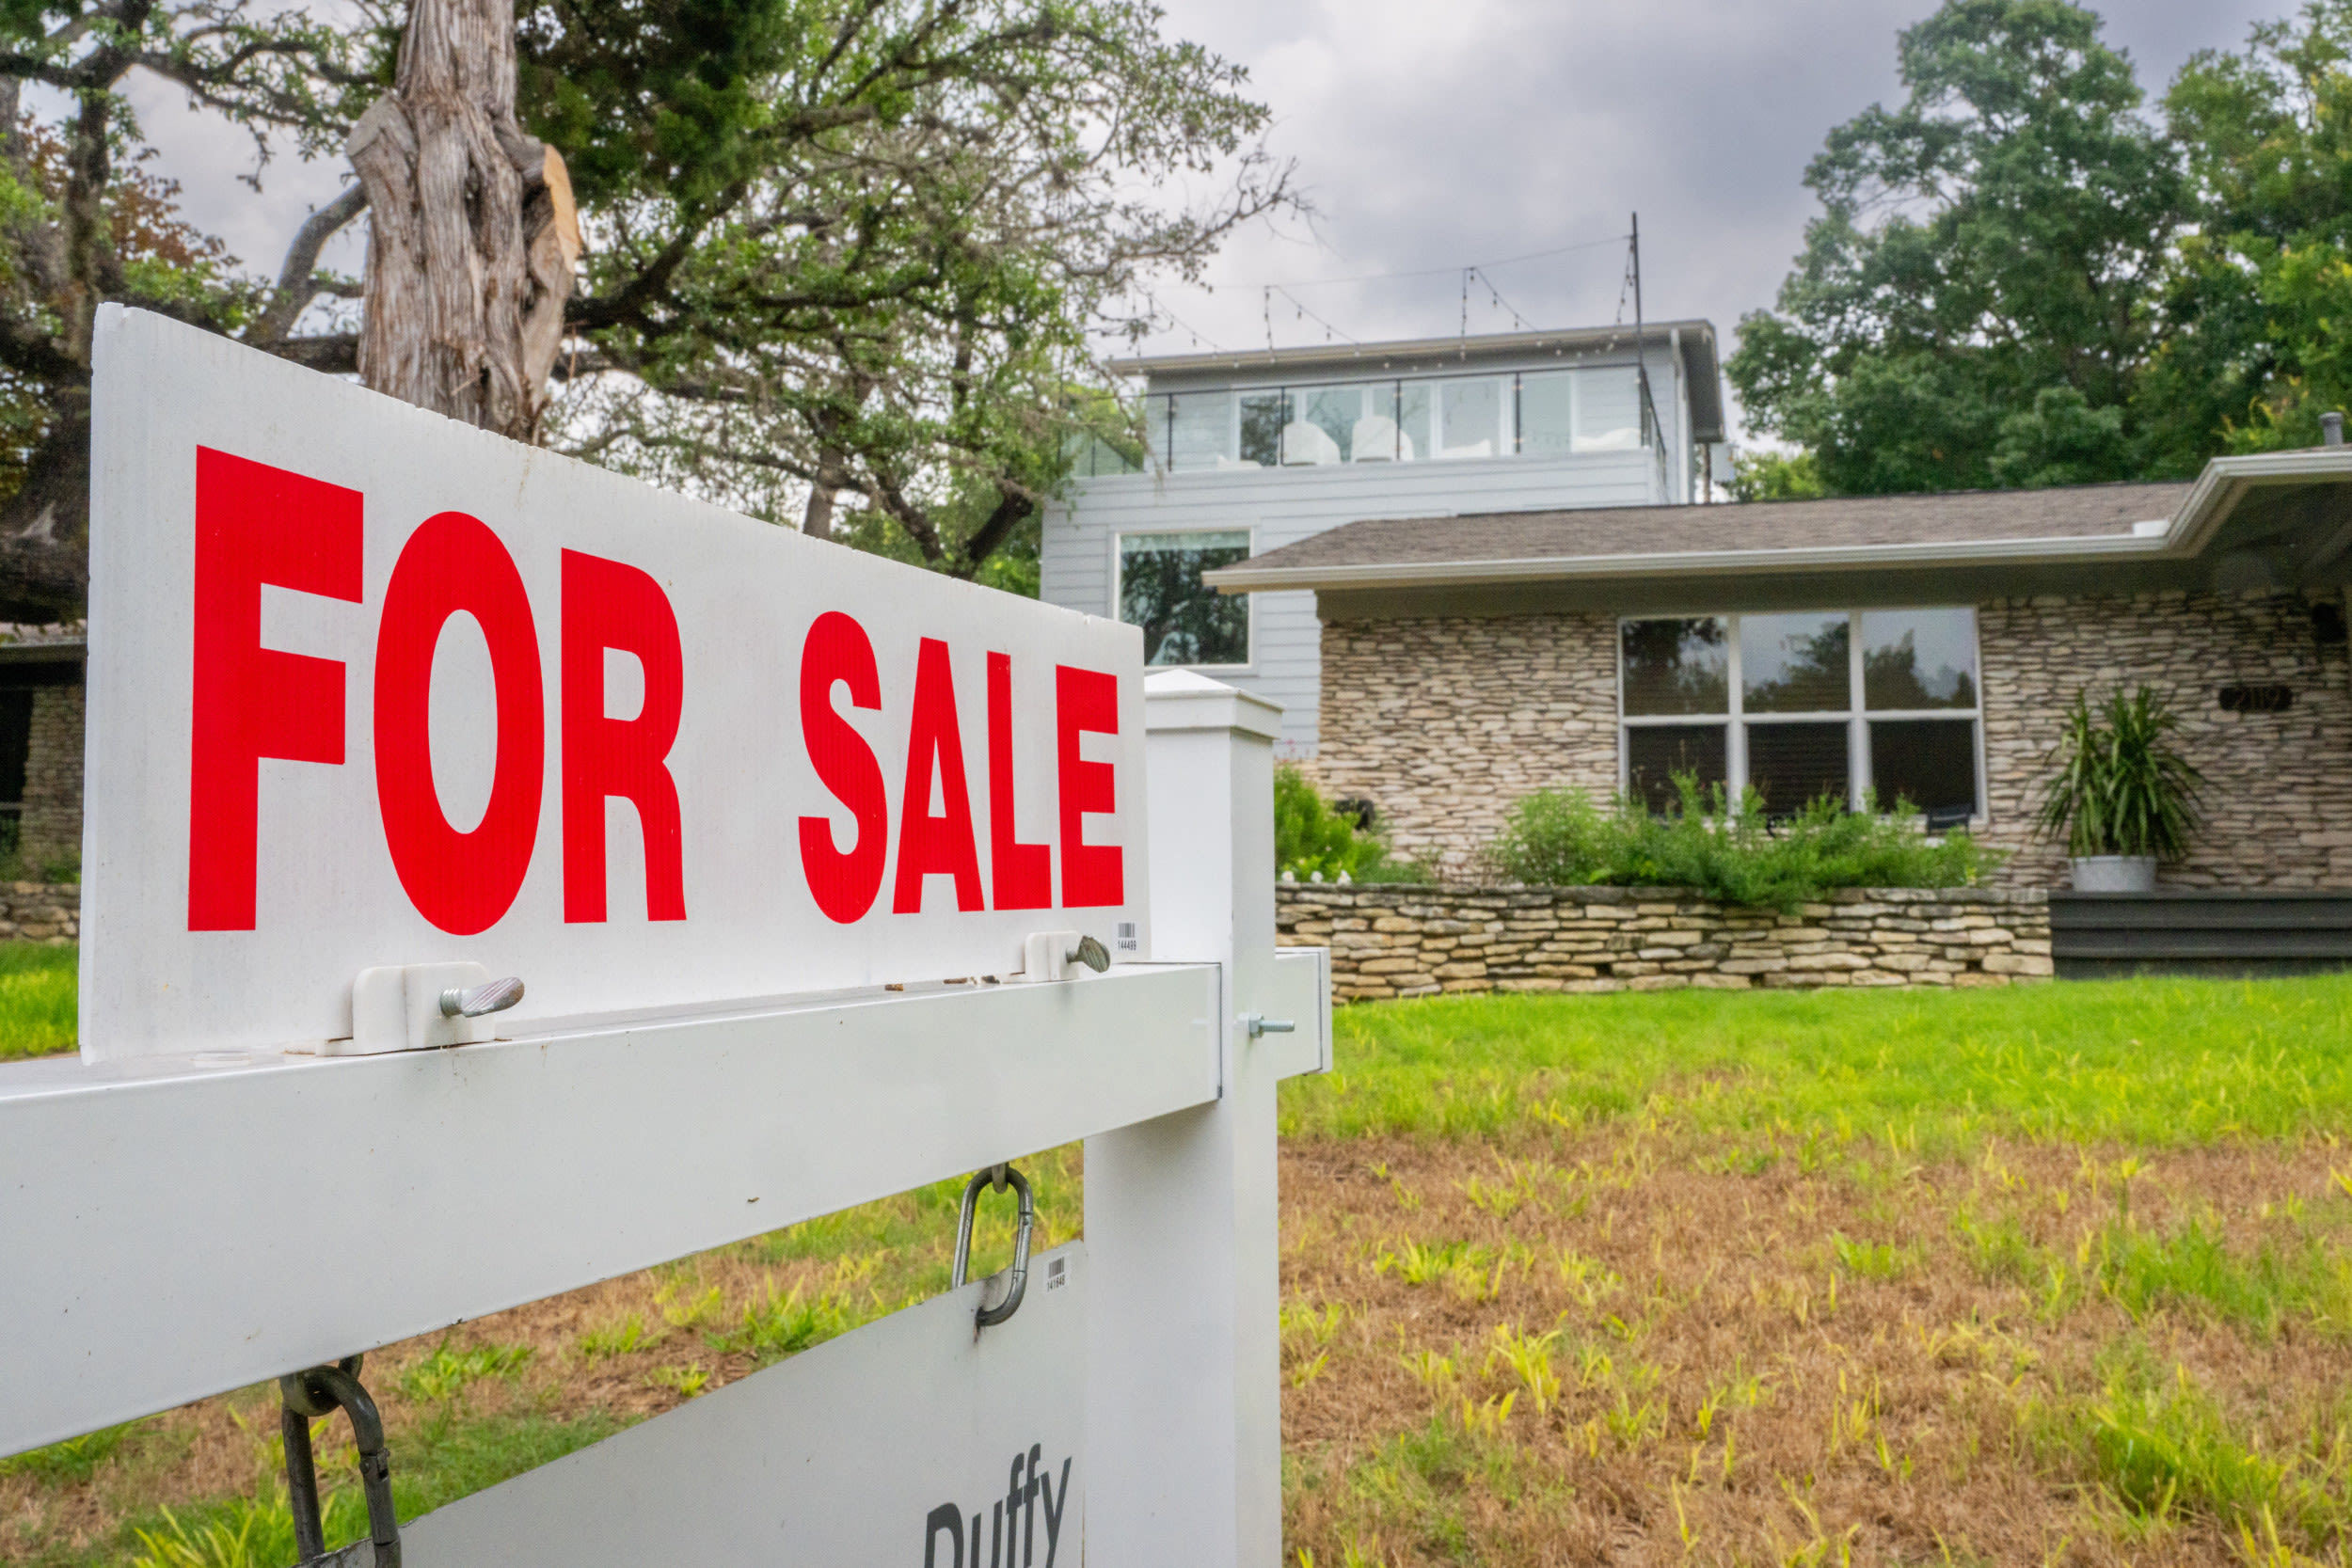 Texas home prices drop as housing market struggles